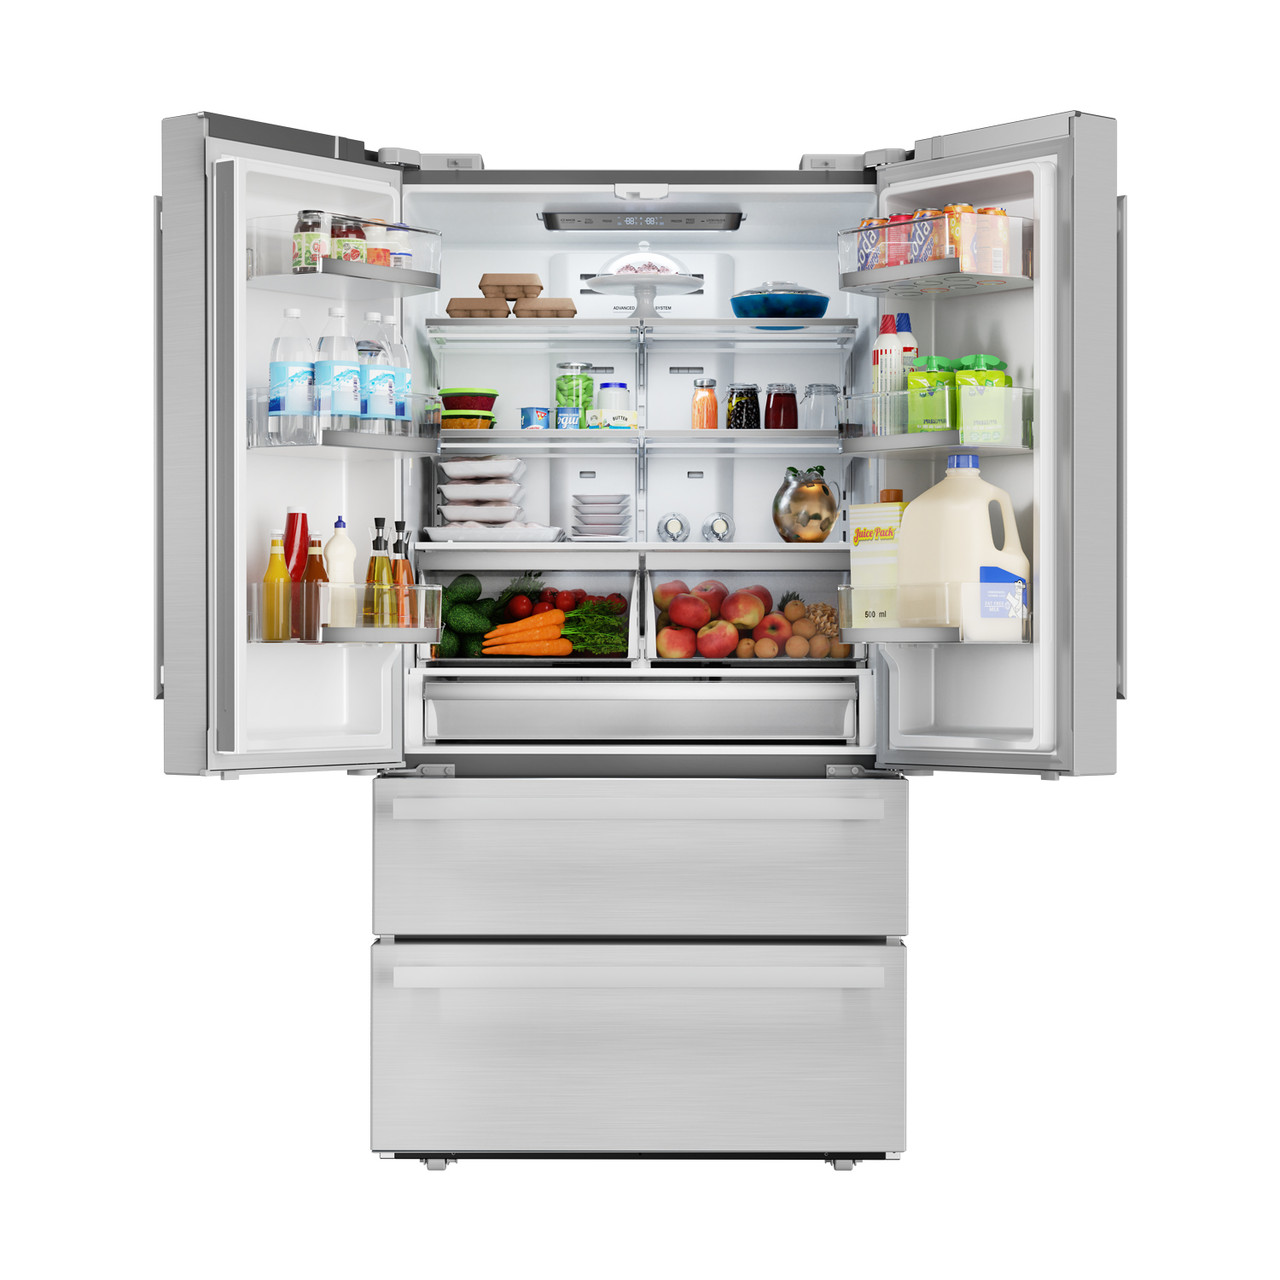 Sharp French 4-Door Counter-Depth Refrigerator (SJG2351FS) head on with food